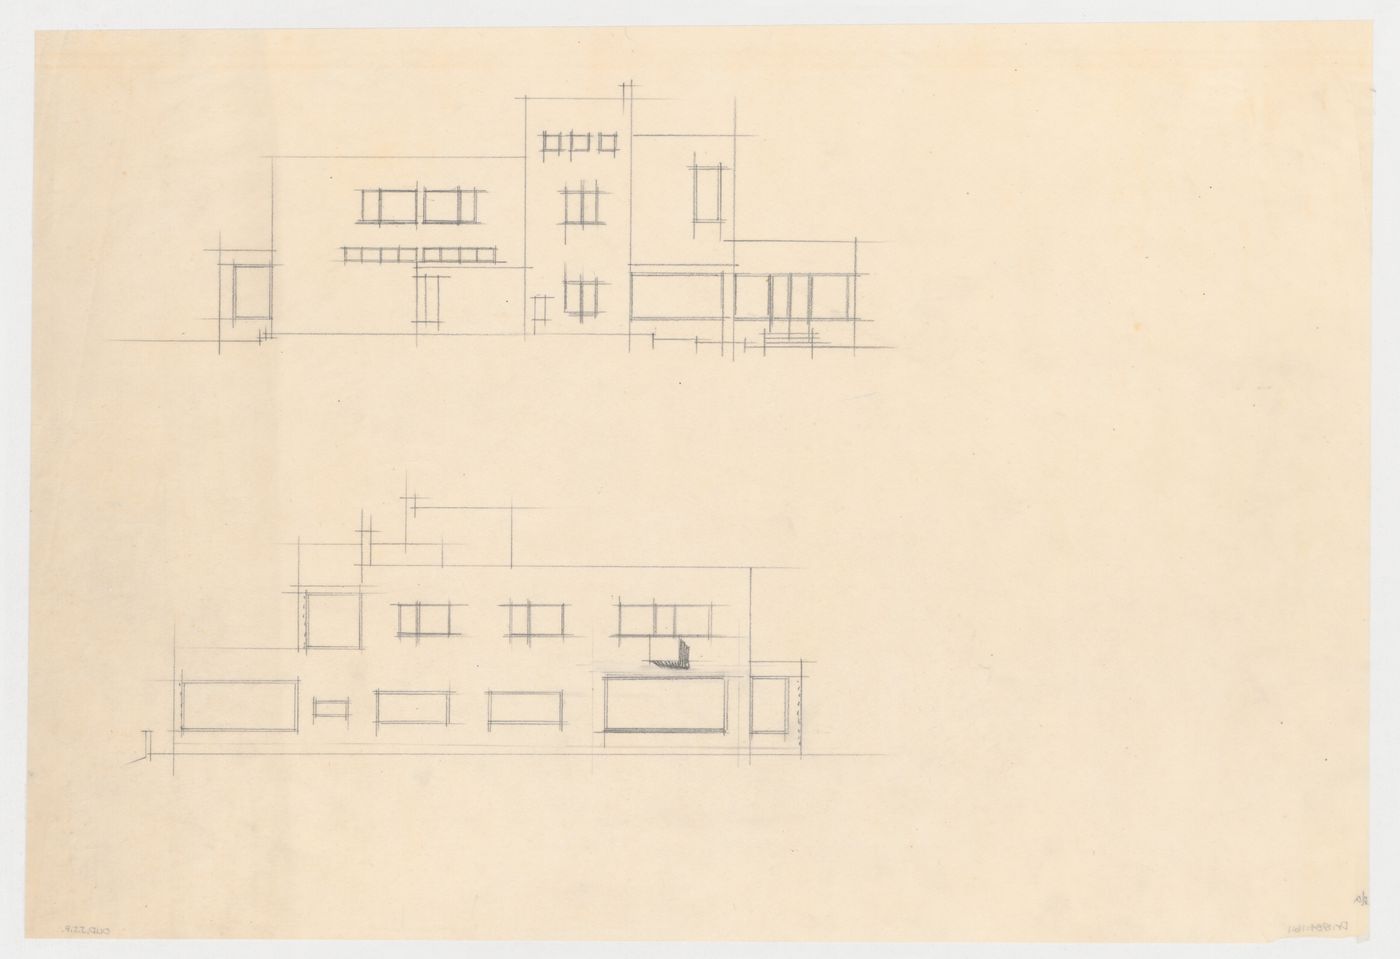 East and west elevations for additions by J.J.P. Oud for Villa Allegonda, Katwijk aan Zee, Netherlands